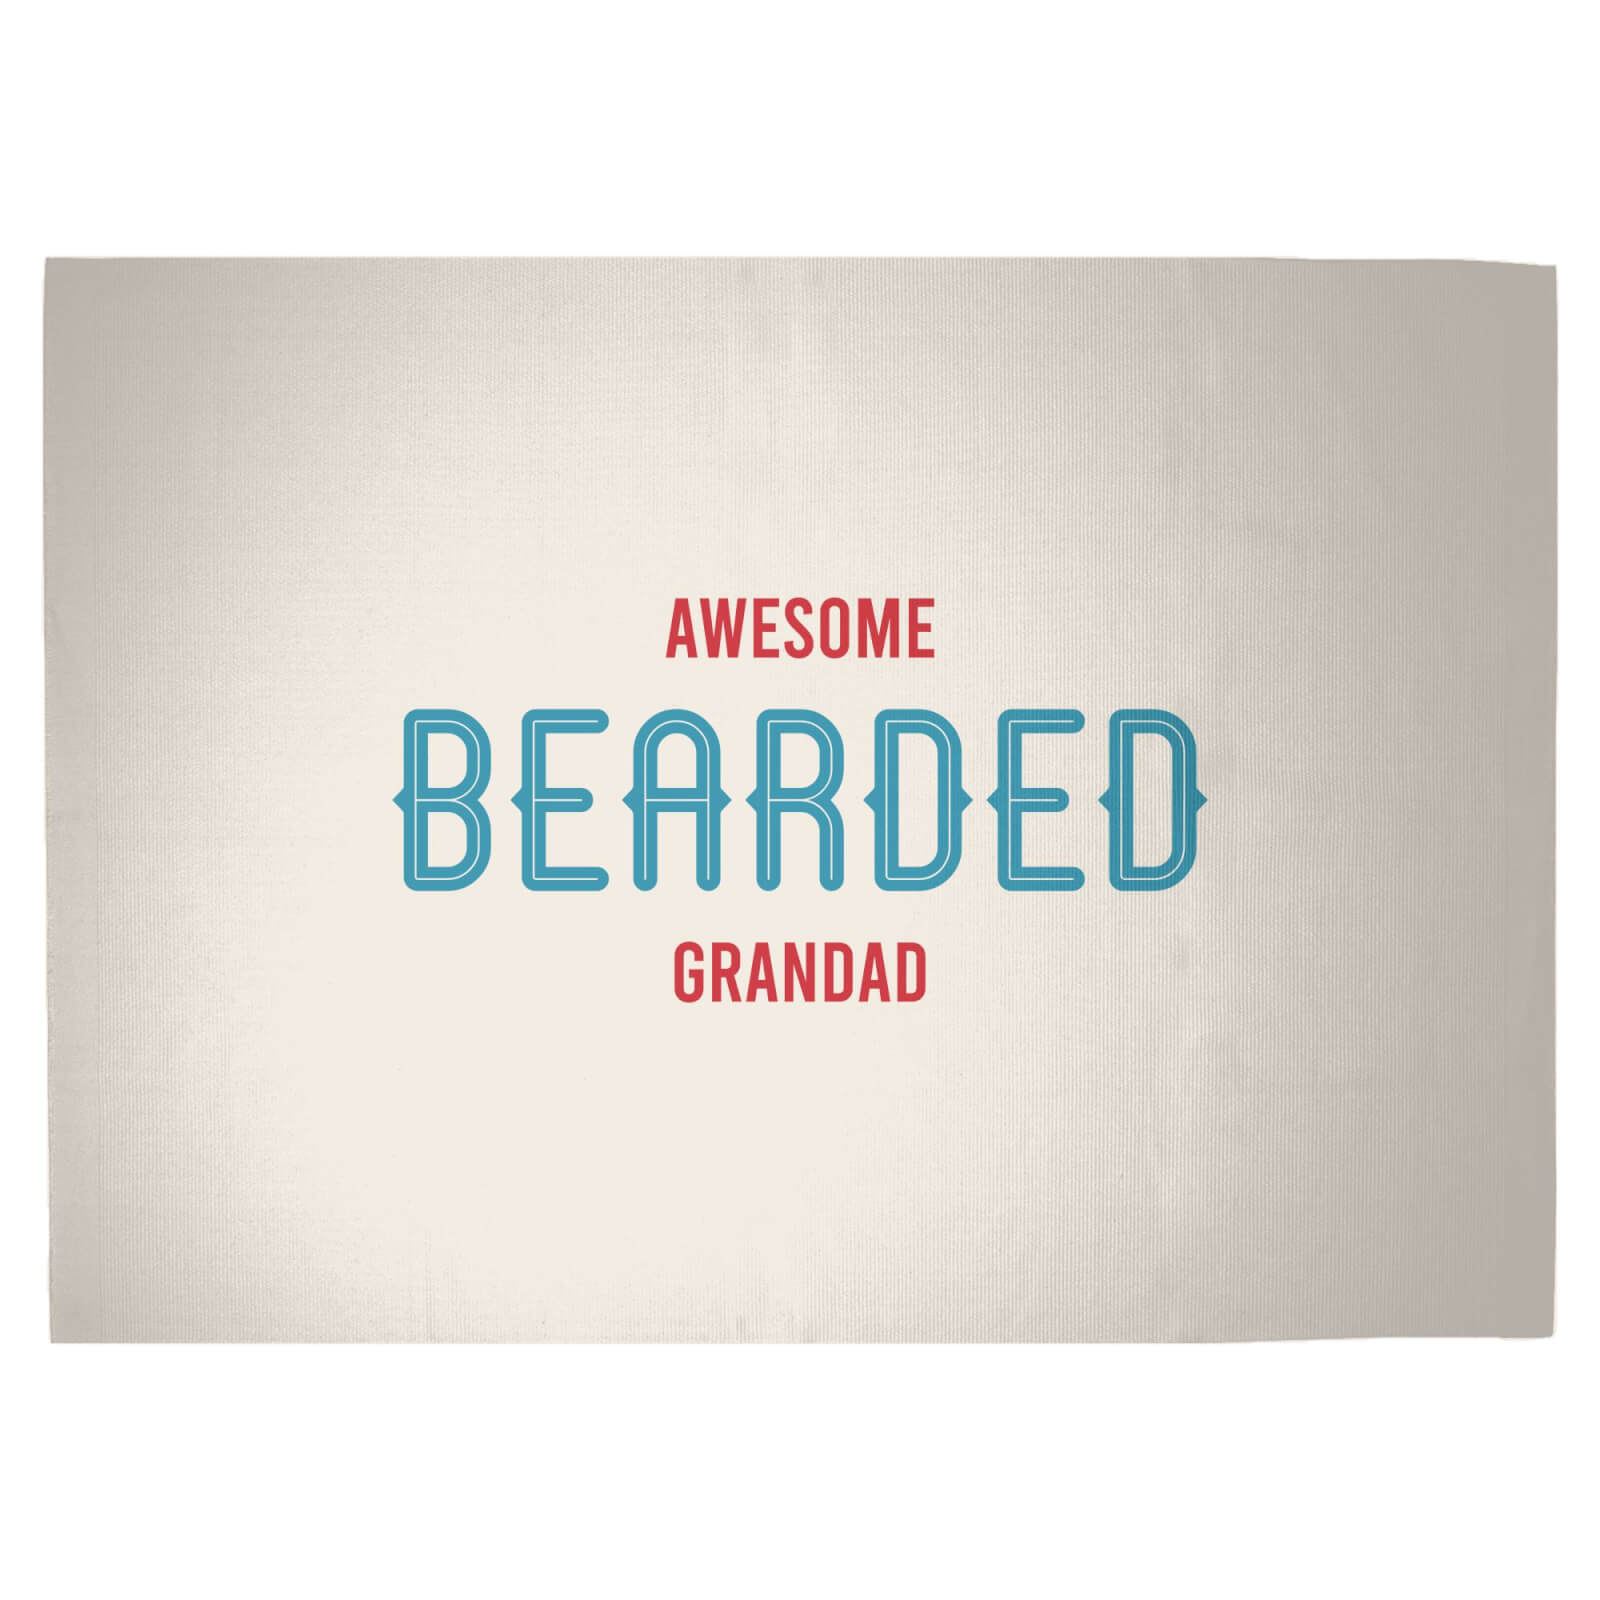 Awesome Bearded Grandad Woven Rug - Large